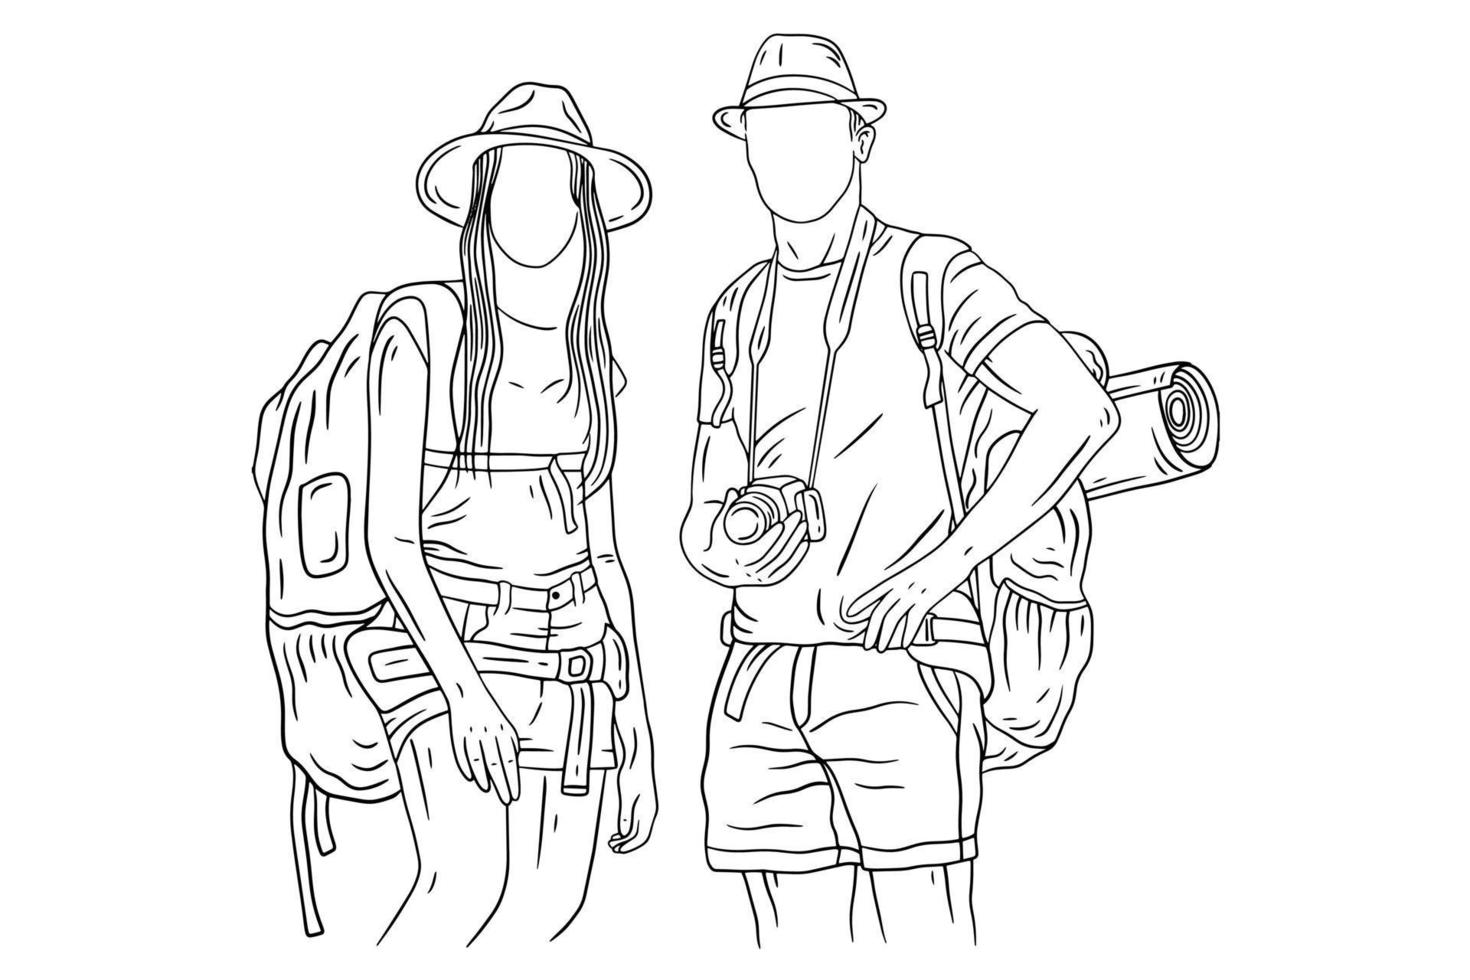 Happy Couple Adventure Explore Trip Mountain Climber Camping Romance Journey Sport Line Art Hand Drawn vector